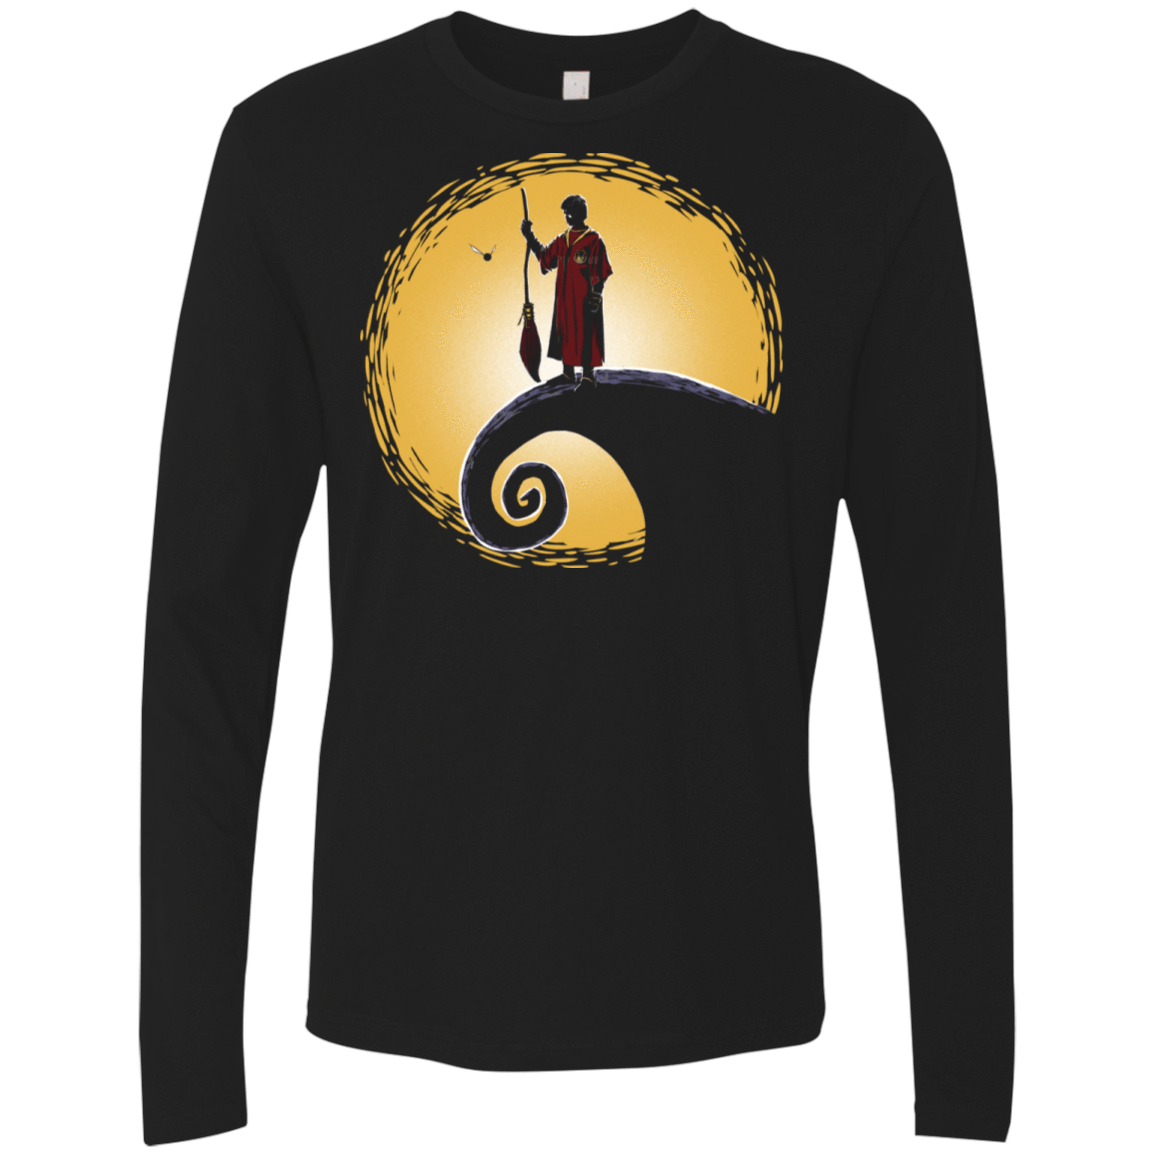 T-Shirts Black / S Quidditch before Christmas Men's Premium Long Sleeve